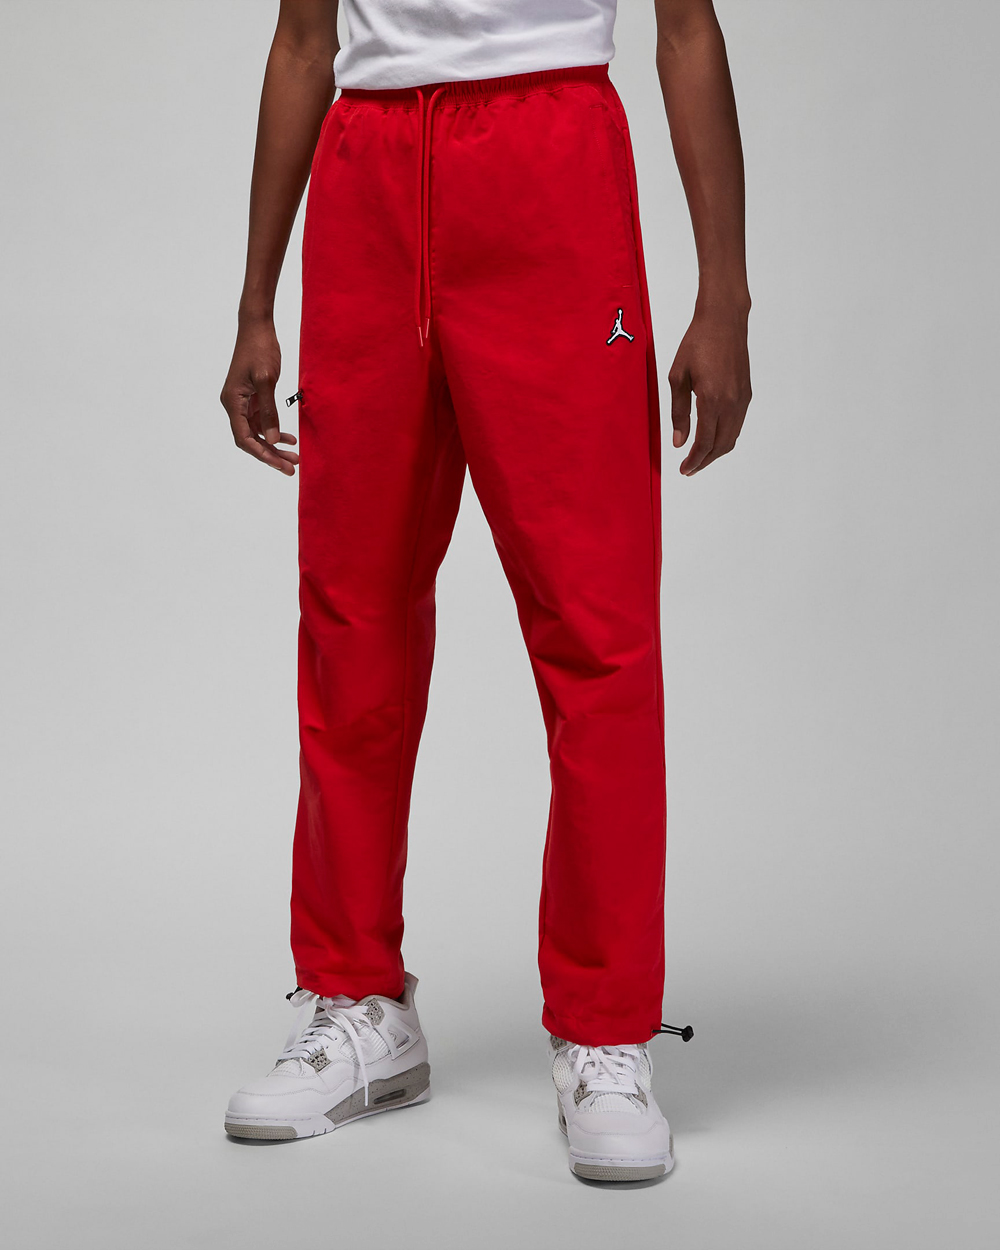 jordan-fire-red-woven-pants-1